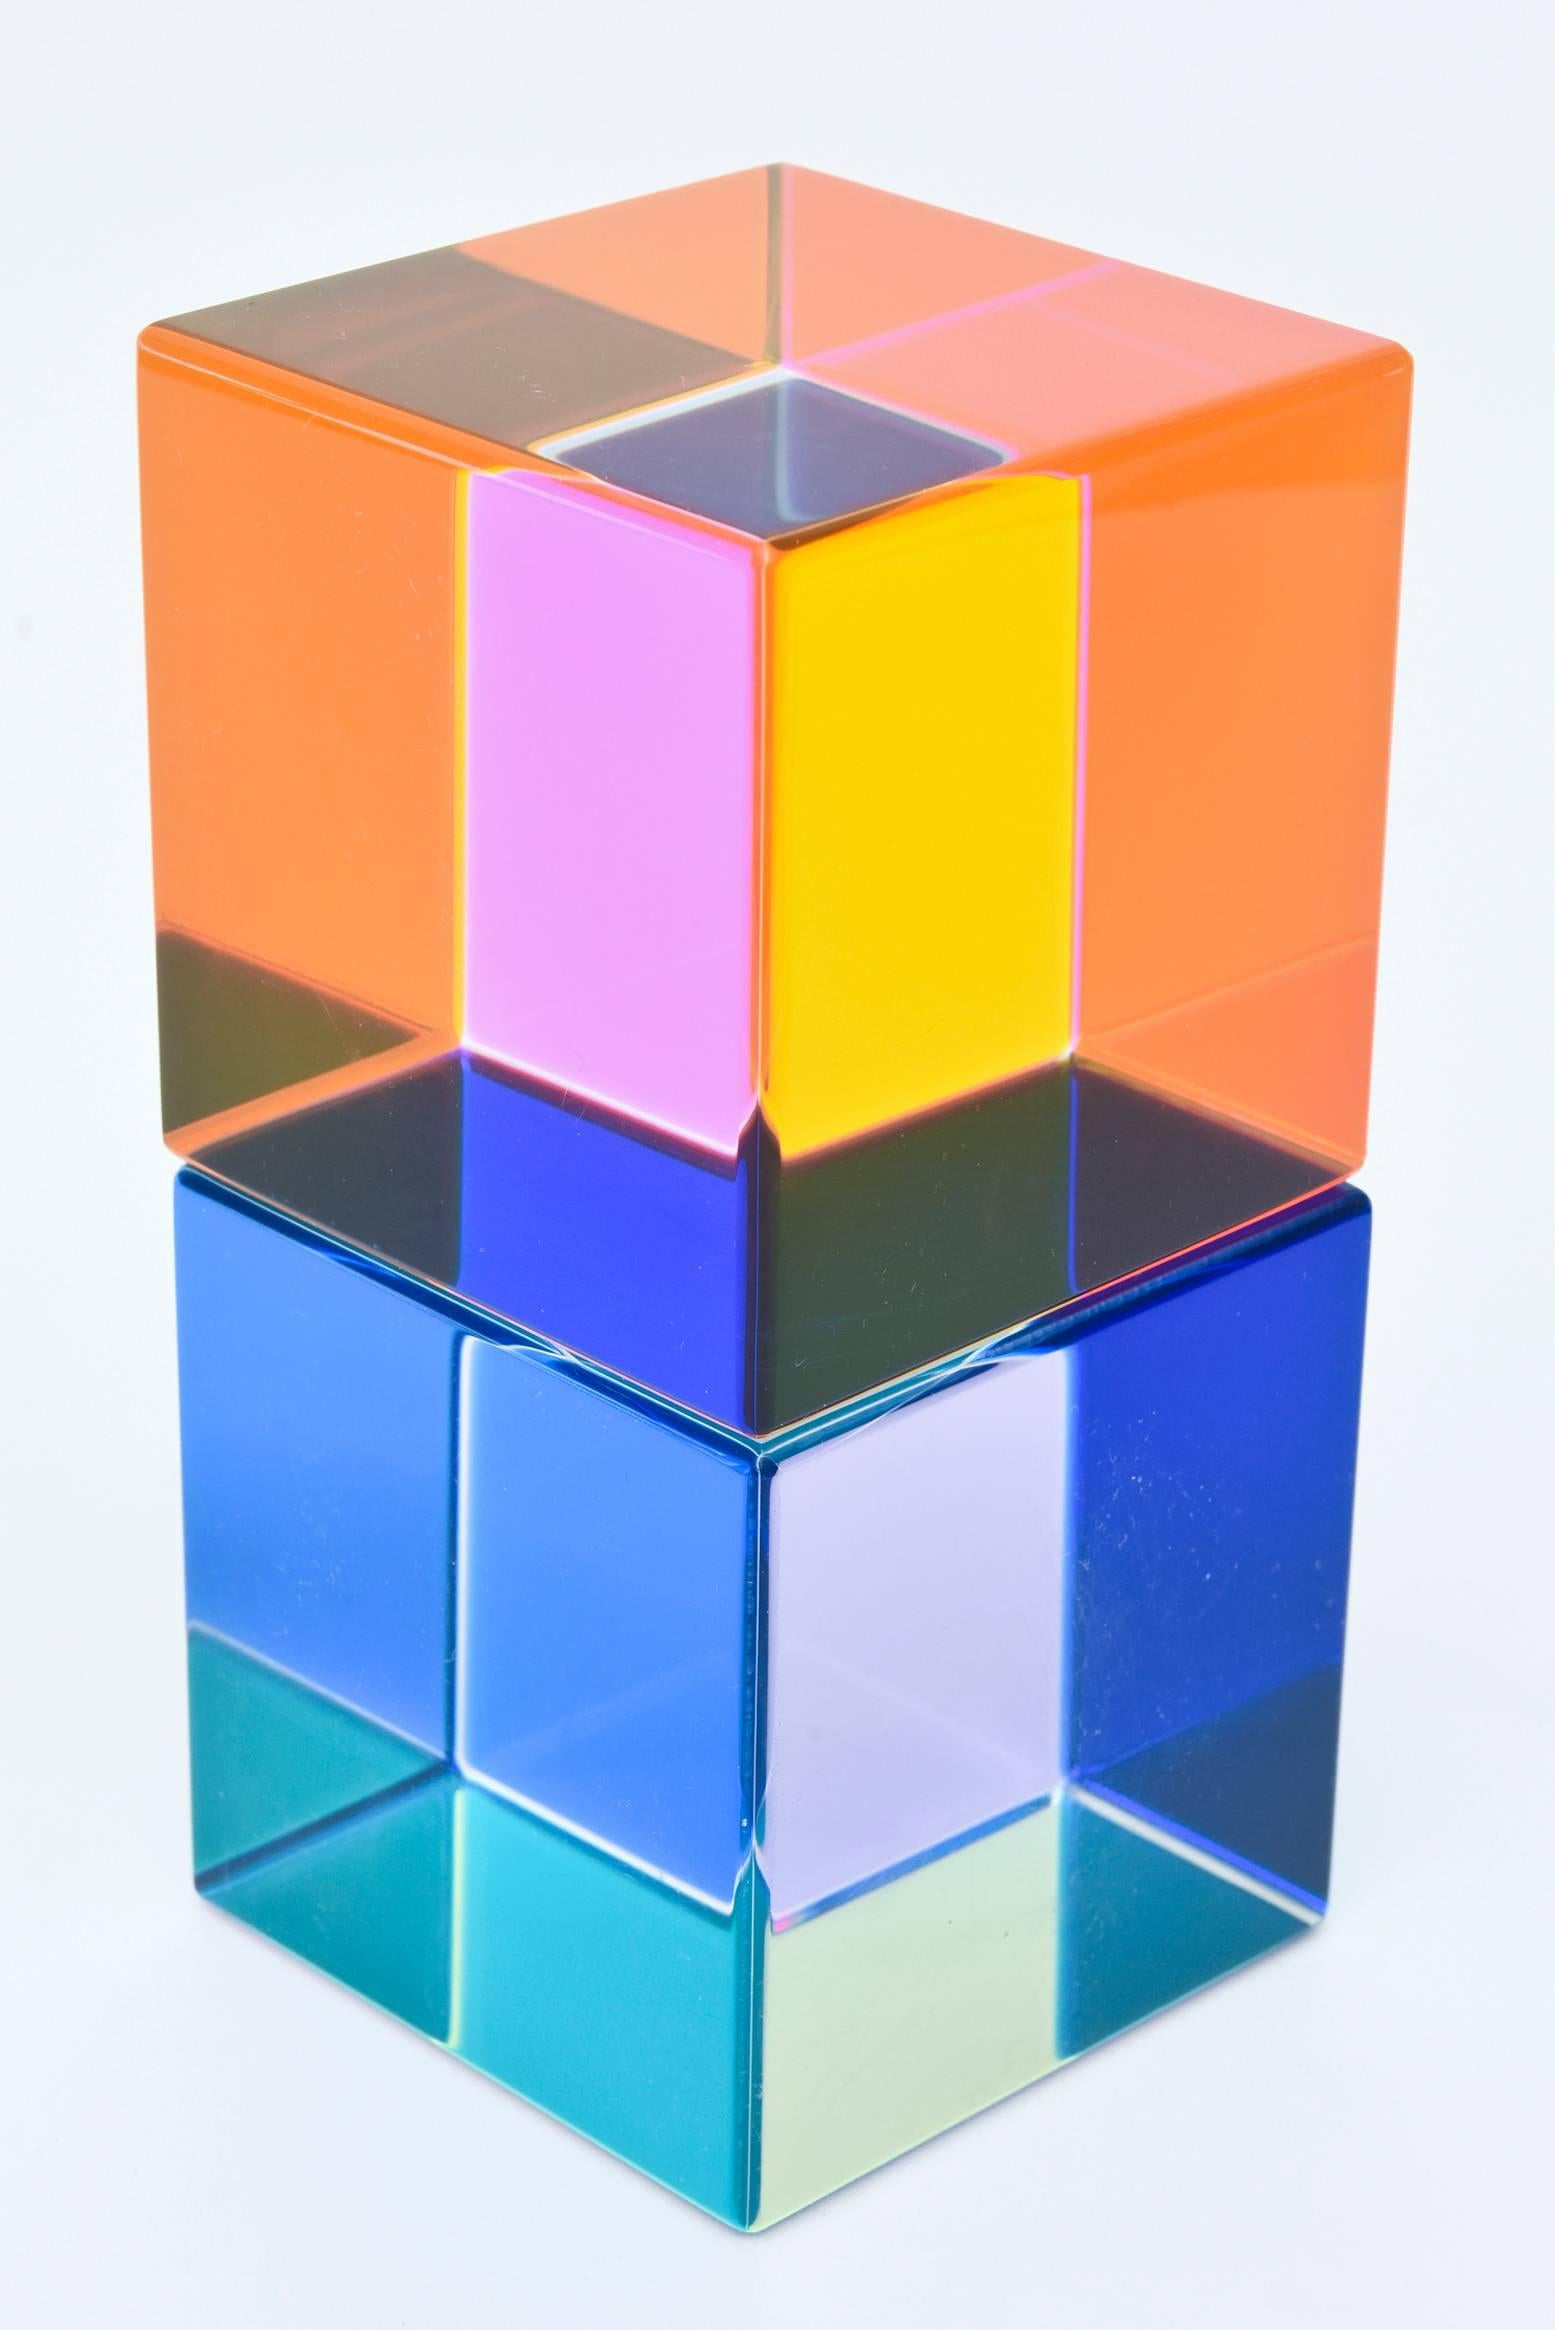 vasa cubes price